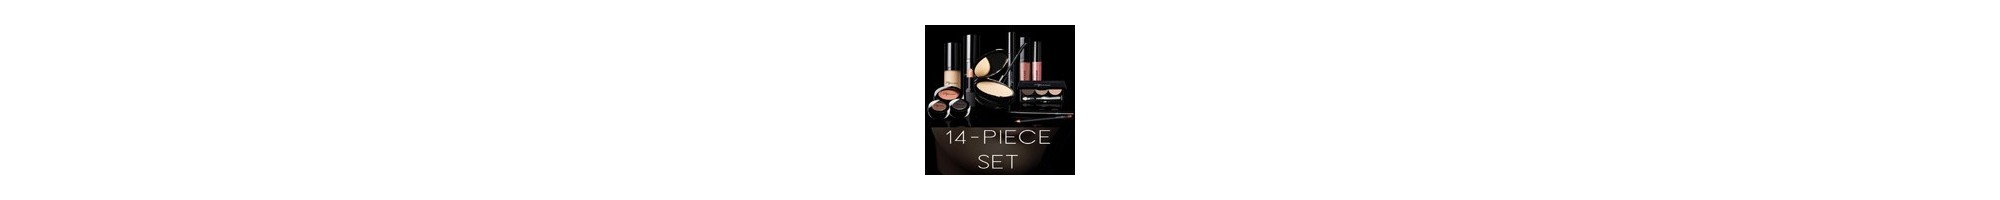 14 Piece Makeup Sets | By Pzarose - Official Site